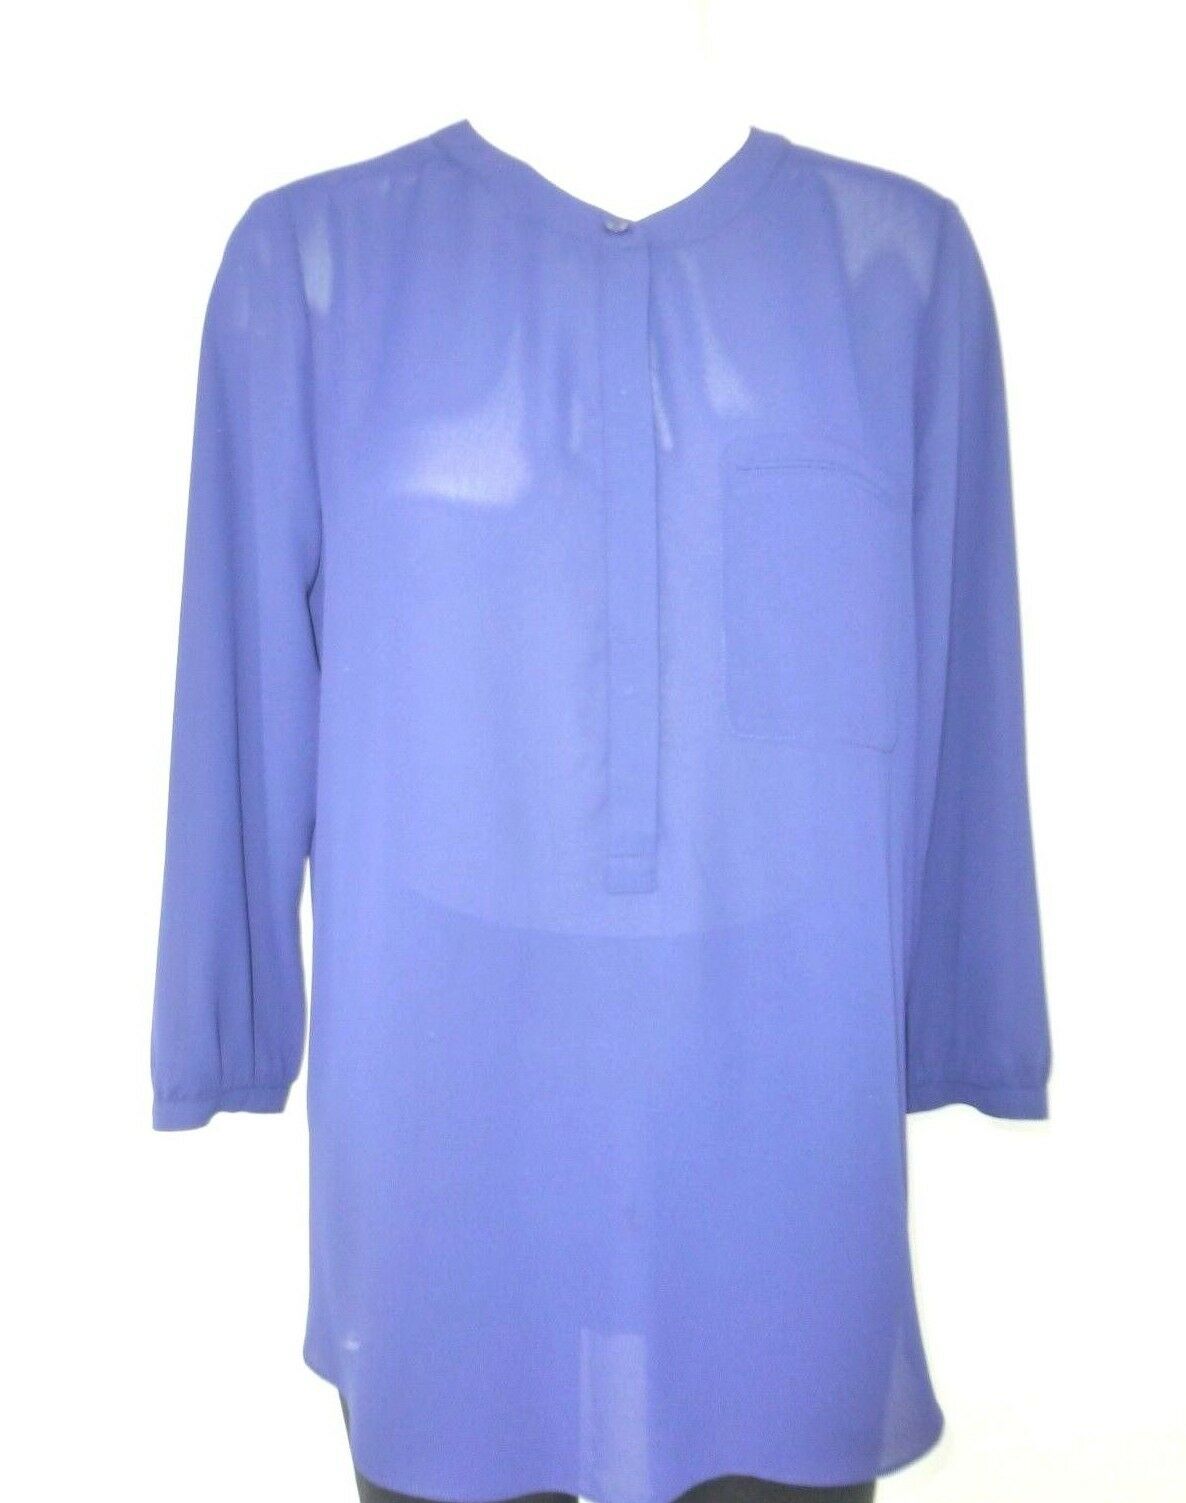 Nydj Damen Tunika Bluse Größe 36 S Blau Night Shade Blue Transparent NP 129 Neu